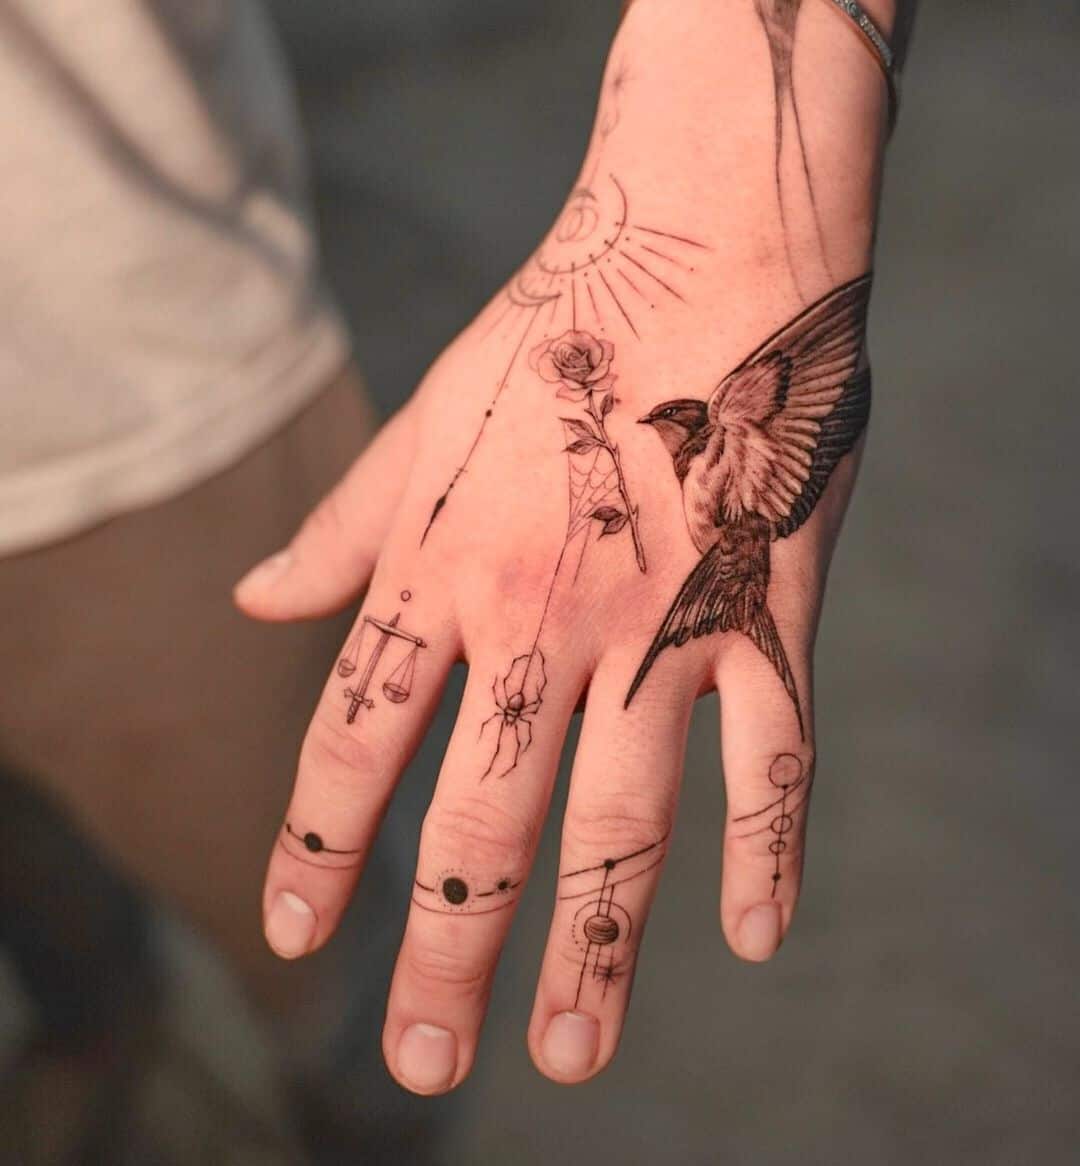 Tatuaje de dedo y mano